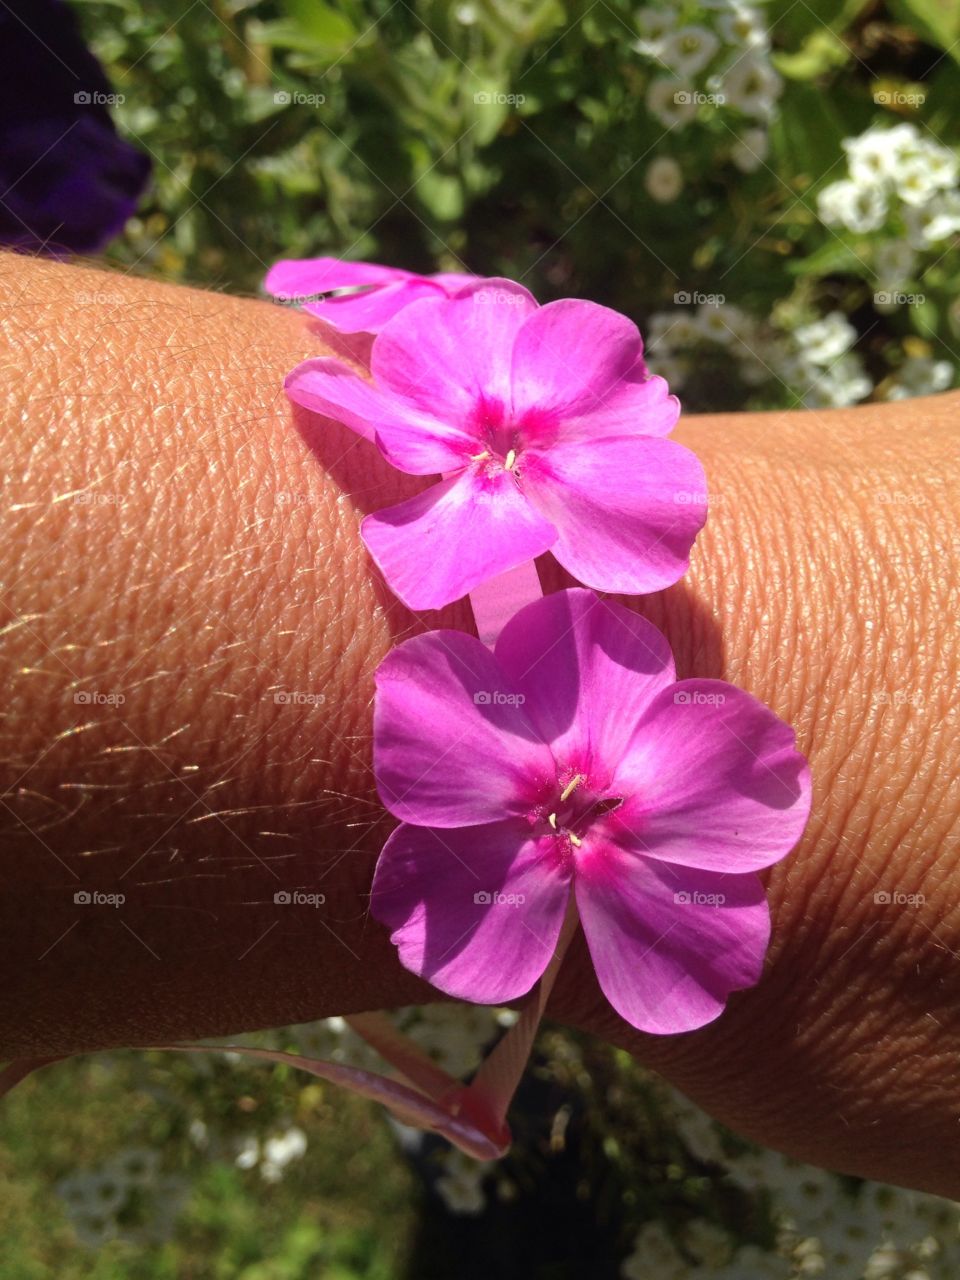 Homemade bracelet made of real flowers

